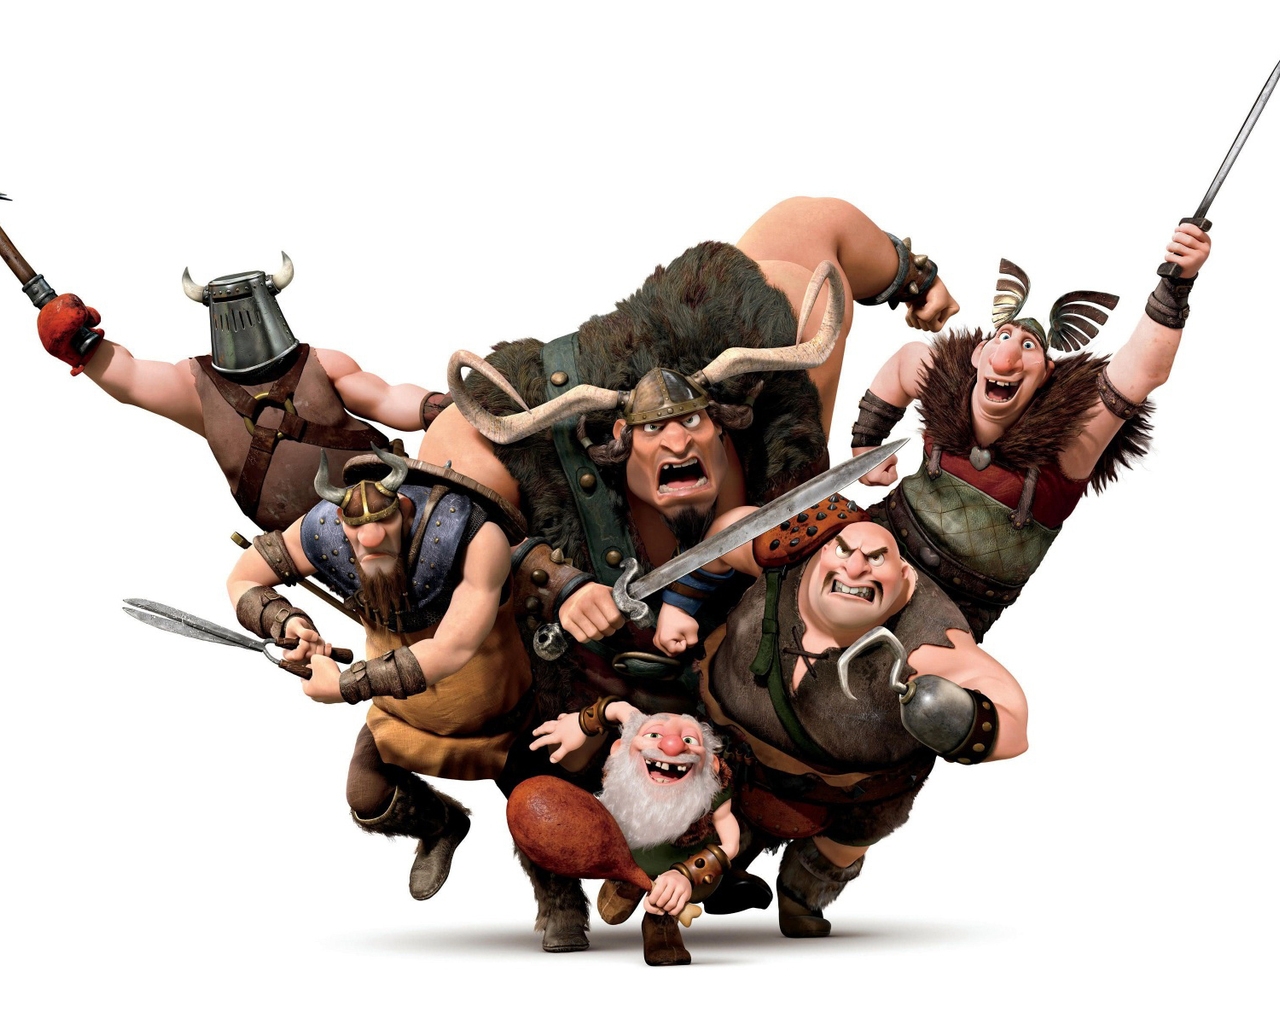 Vikings Warriors for 1280 x 1024 resolution